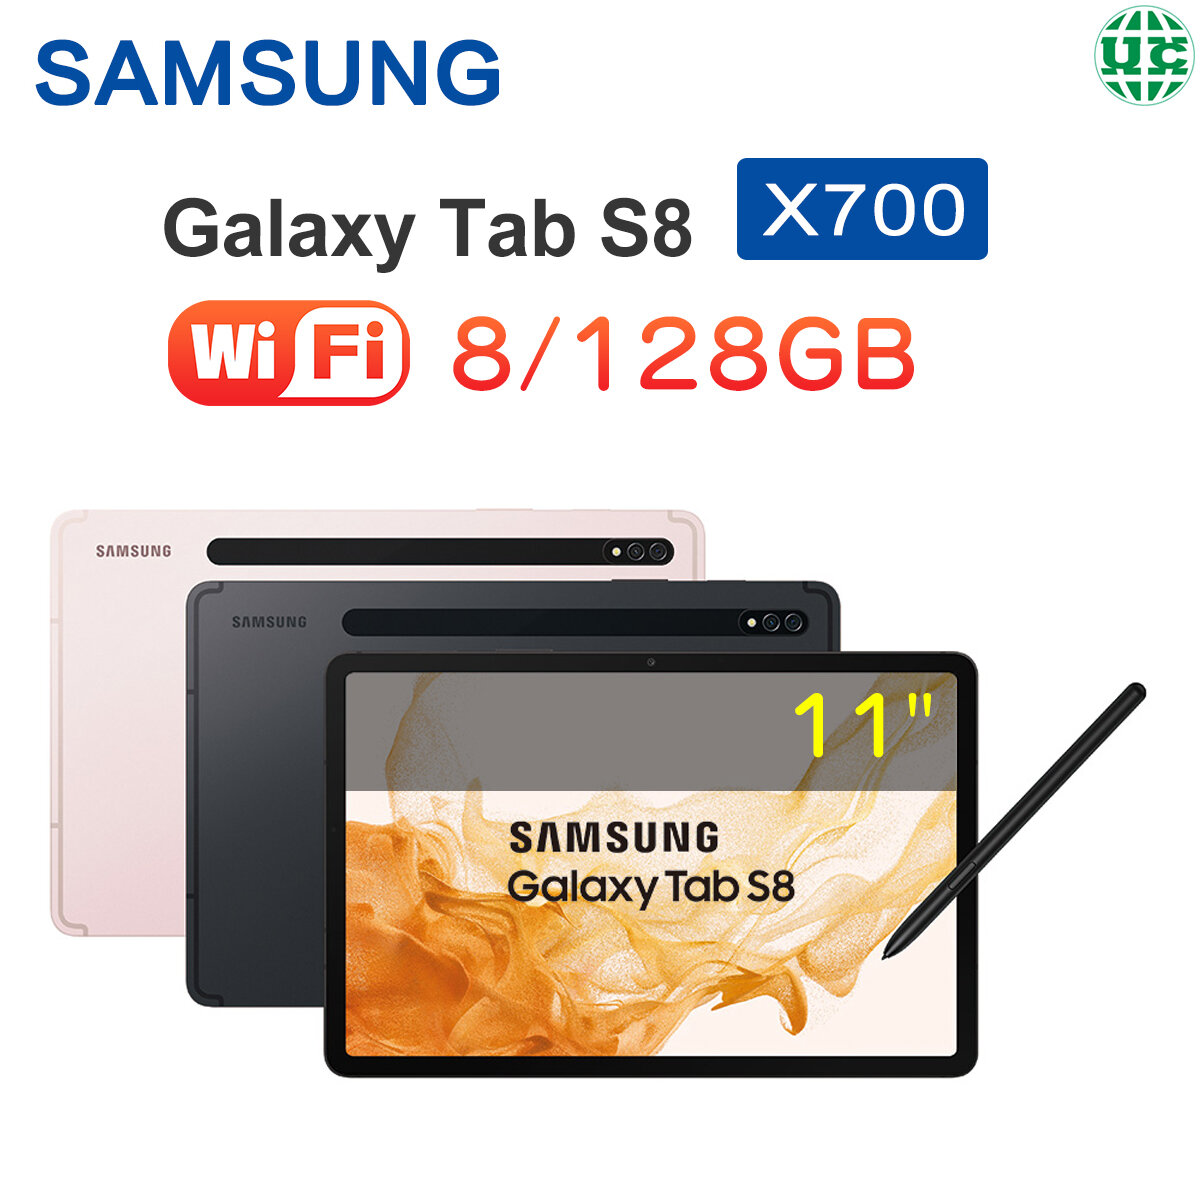 Samsung | Galaxy Tab S8 11 WiFi 平板電腦X700 - 霧光粉紅(8+128GB